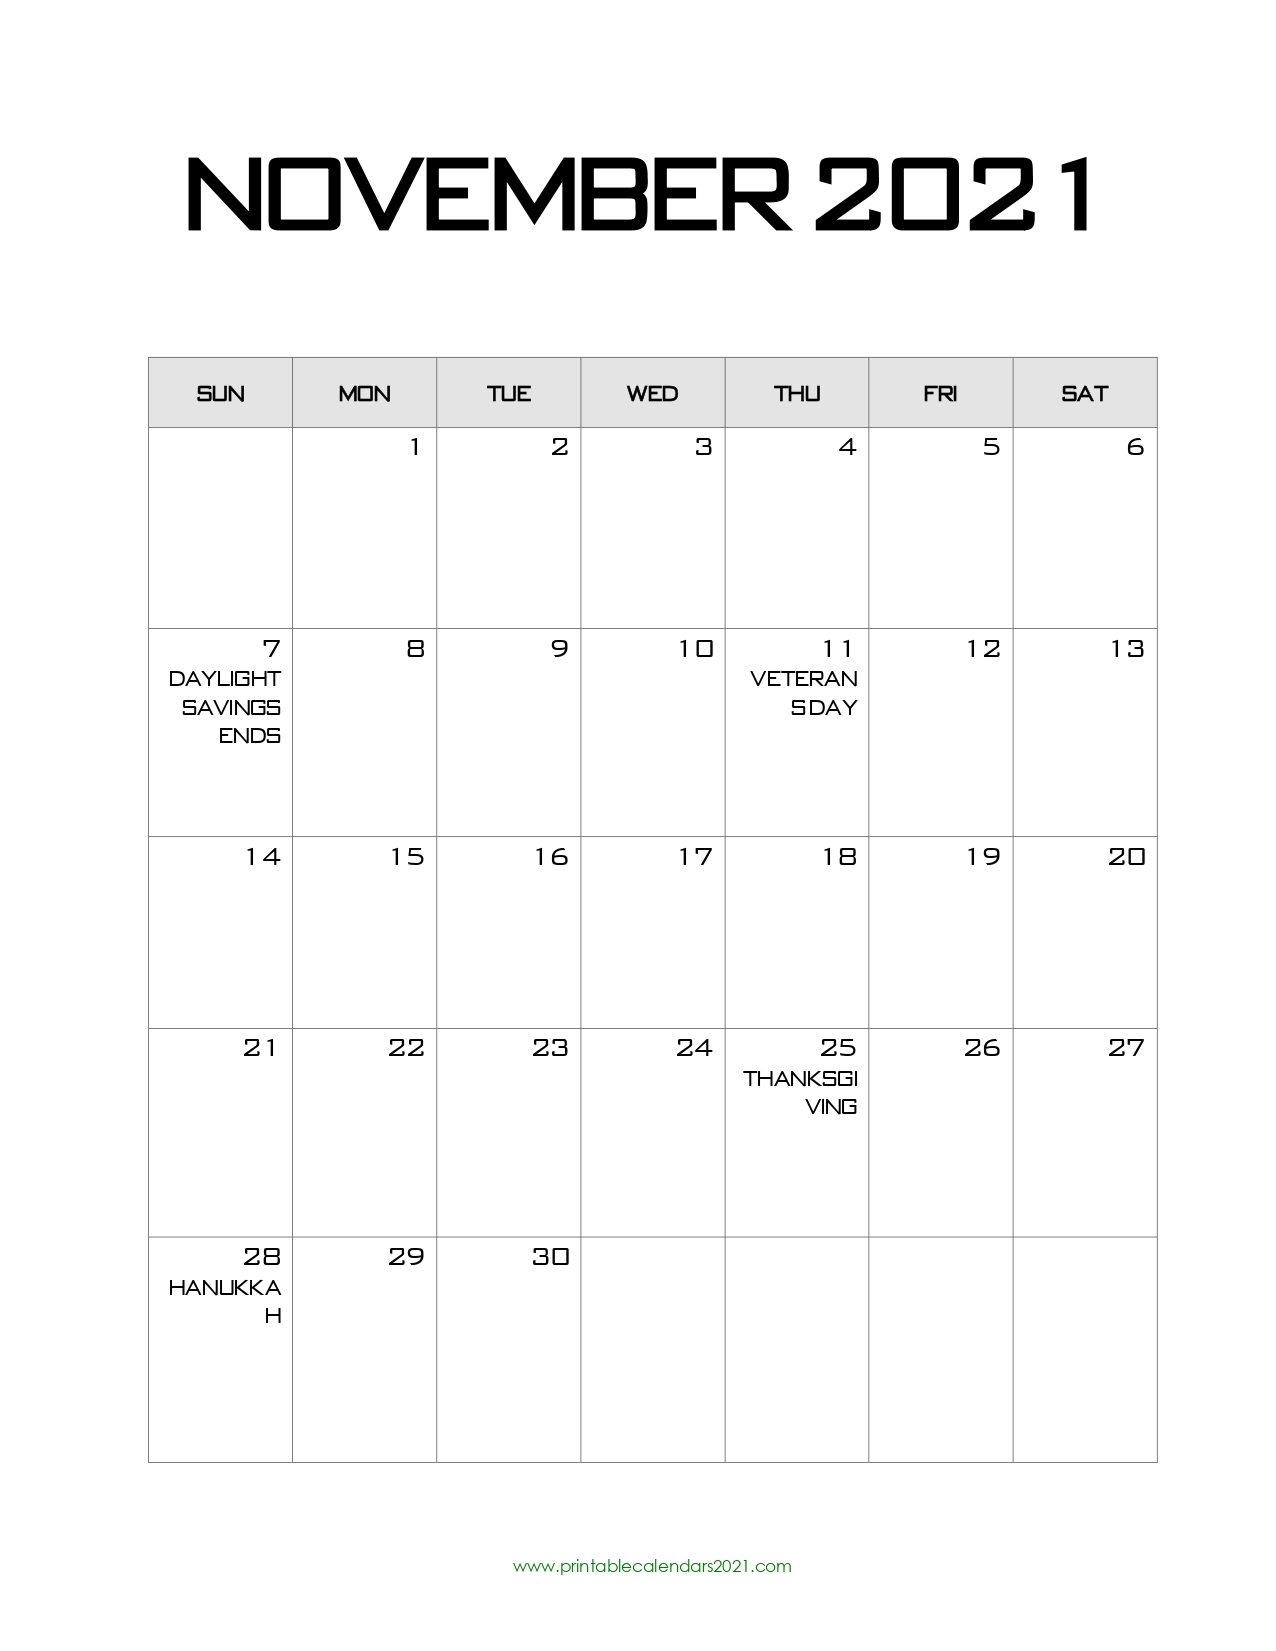 44+ November 2021 Calendar Printable, November 2021 Calendar Pdf November 2021 Calendar Uk